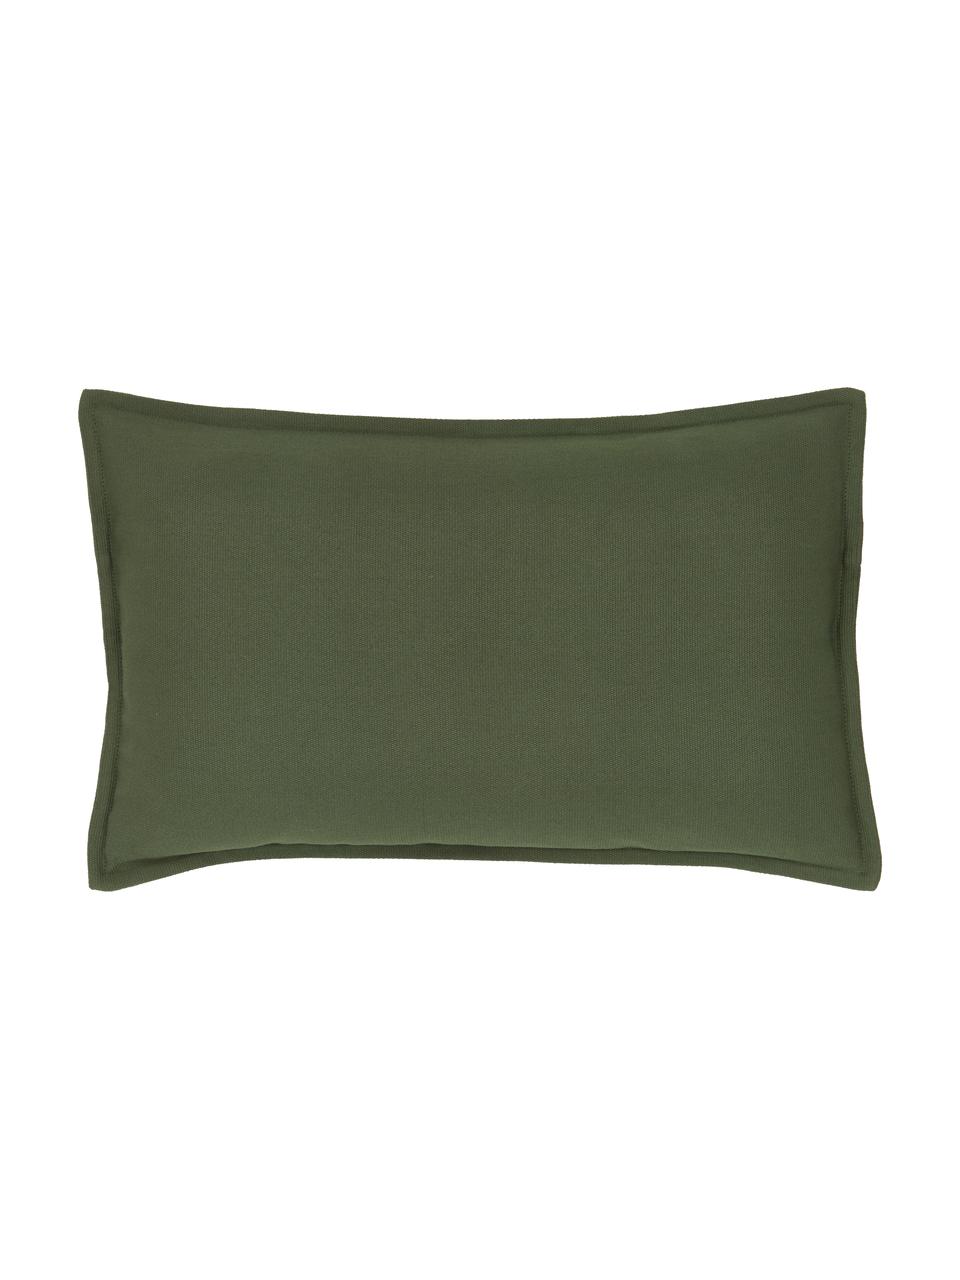 Federa arredo in cotone verde muschio Mads, 100% cotone, Verde, Larg. 30 x Lung. 50 cm